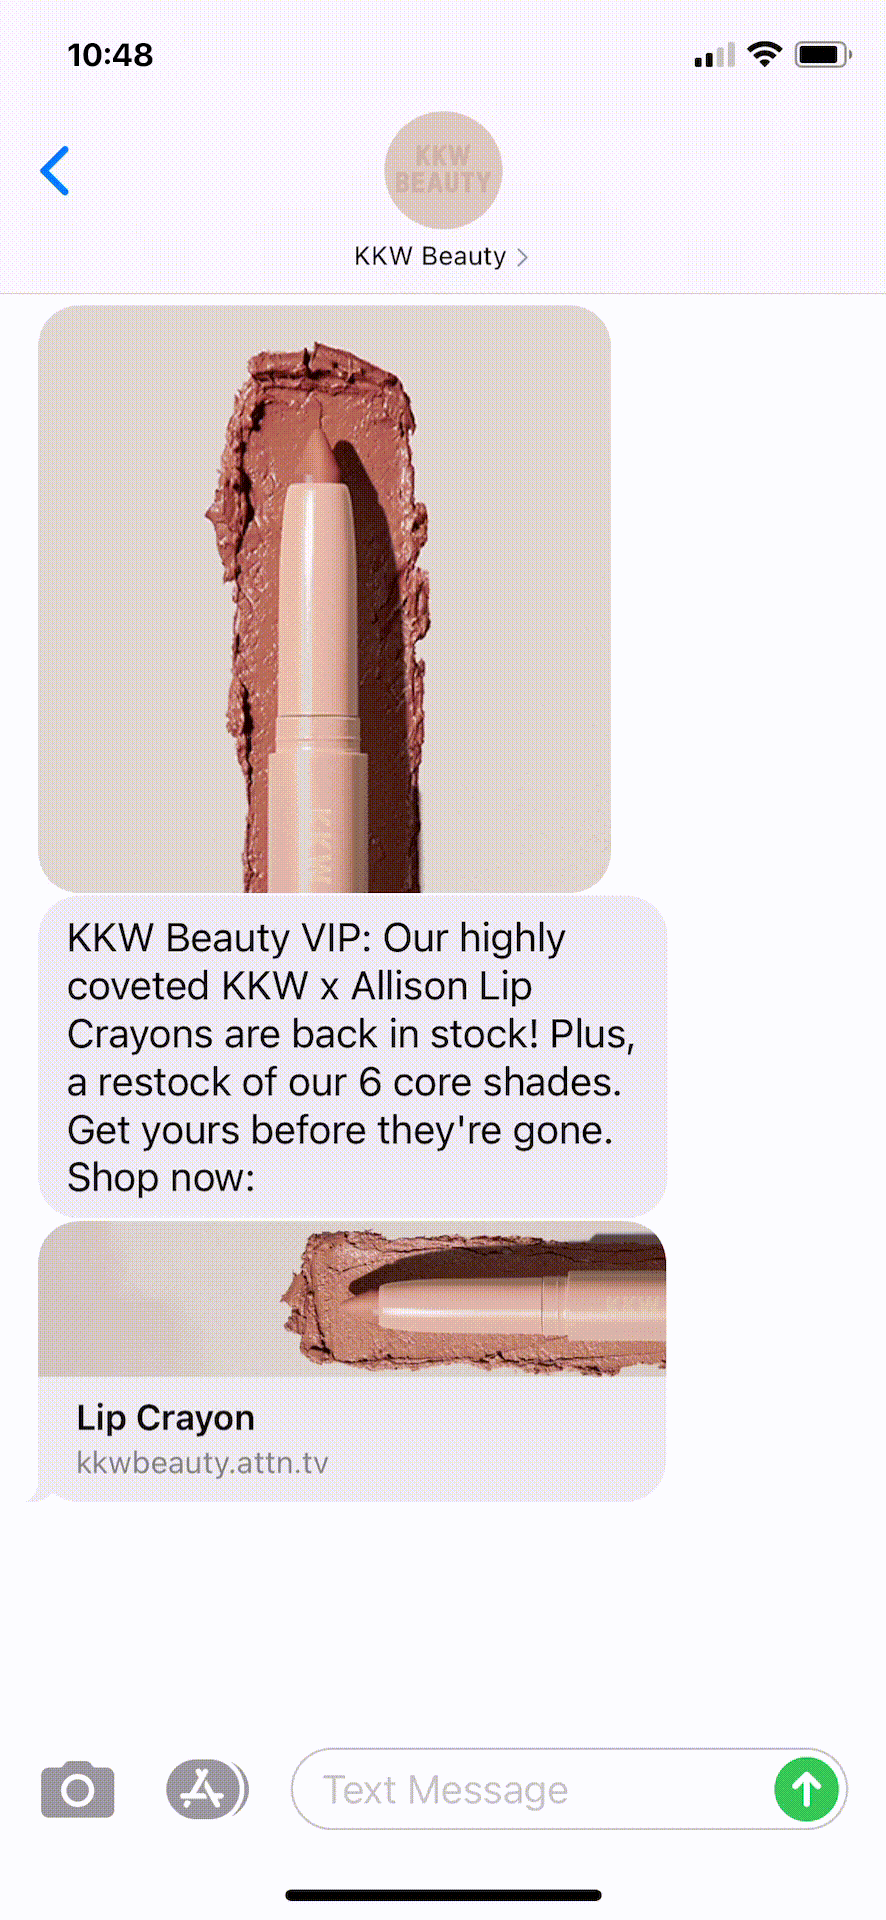 KKW-Beauty-Text-Message-Marketing-Example-03.26.2021